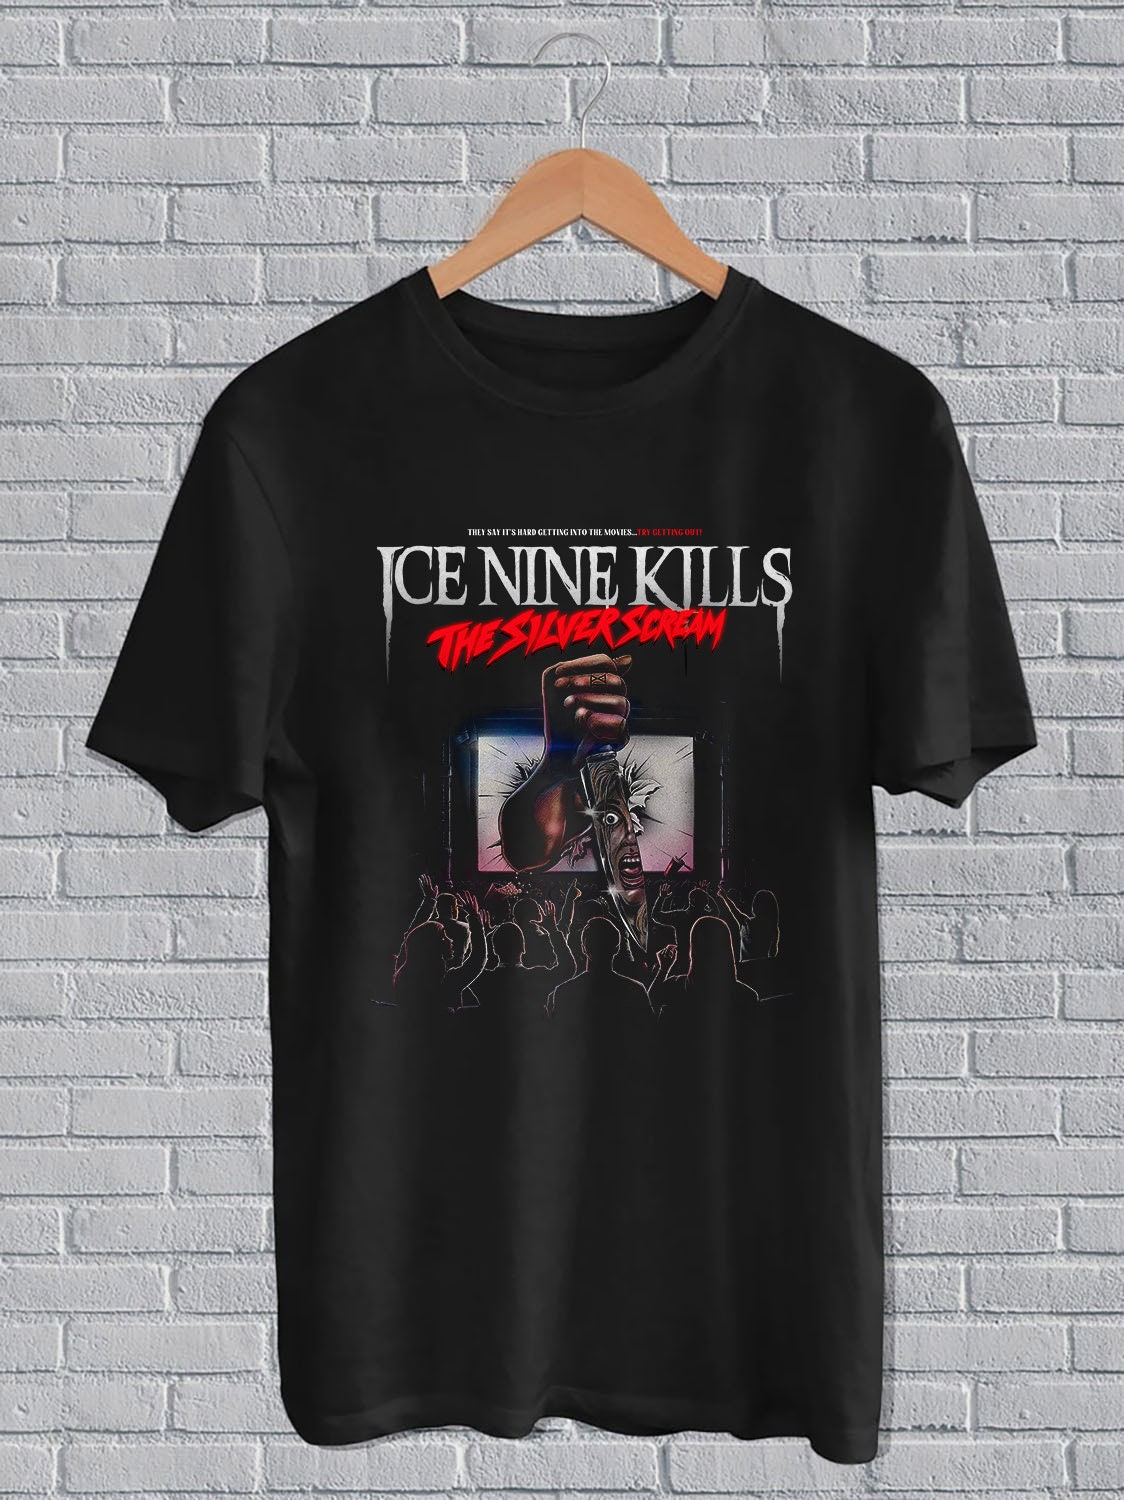 Shop the Best Ice Nine Kills Merch Online